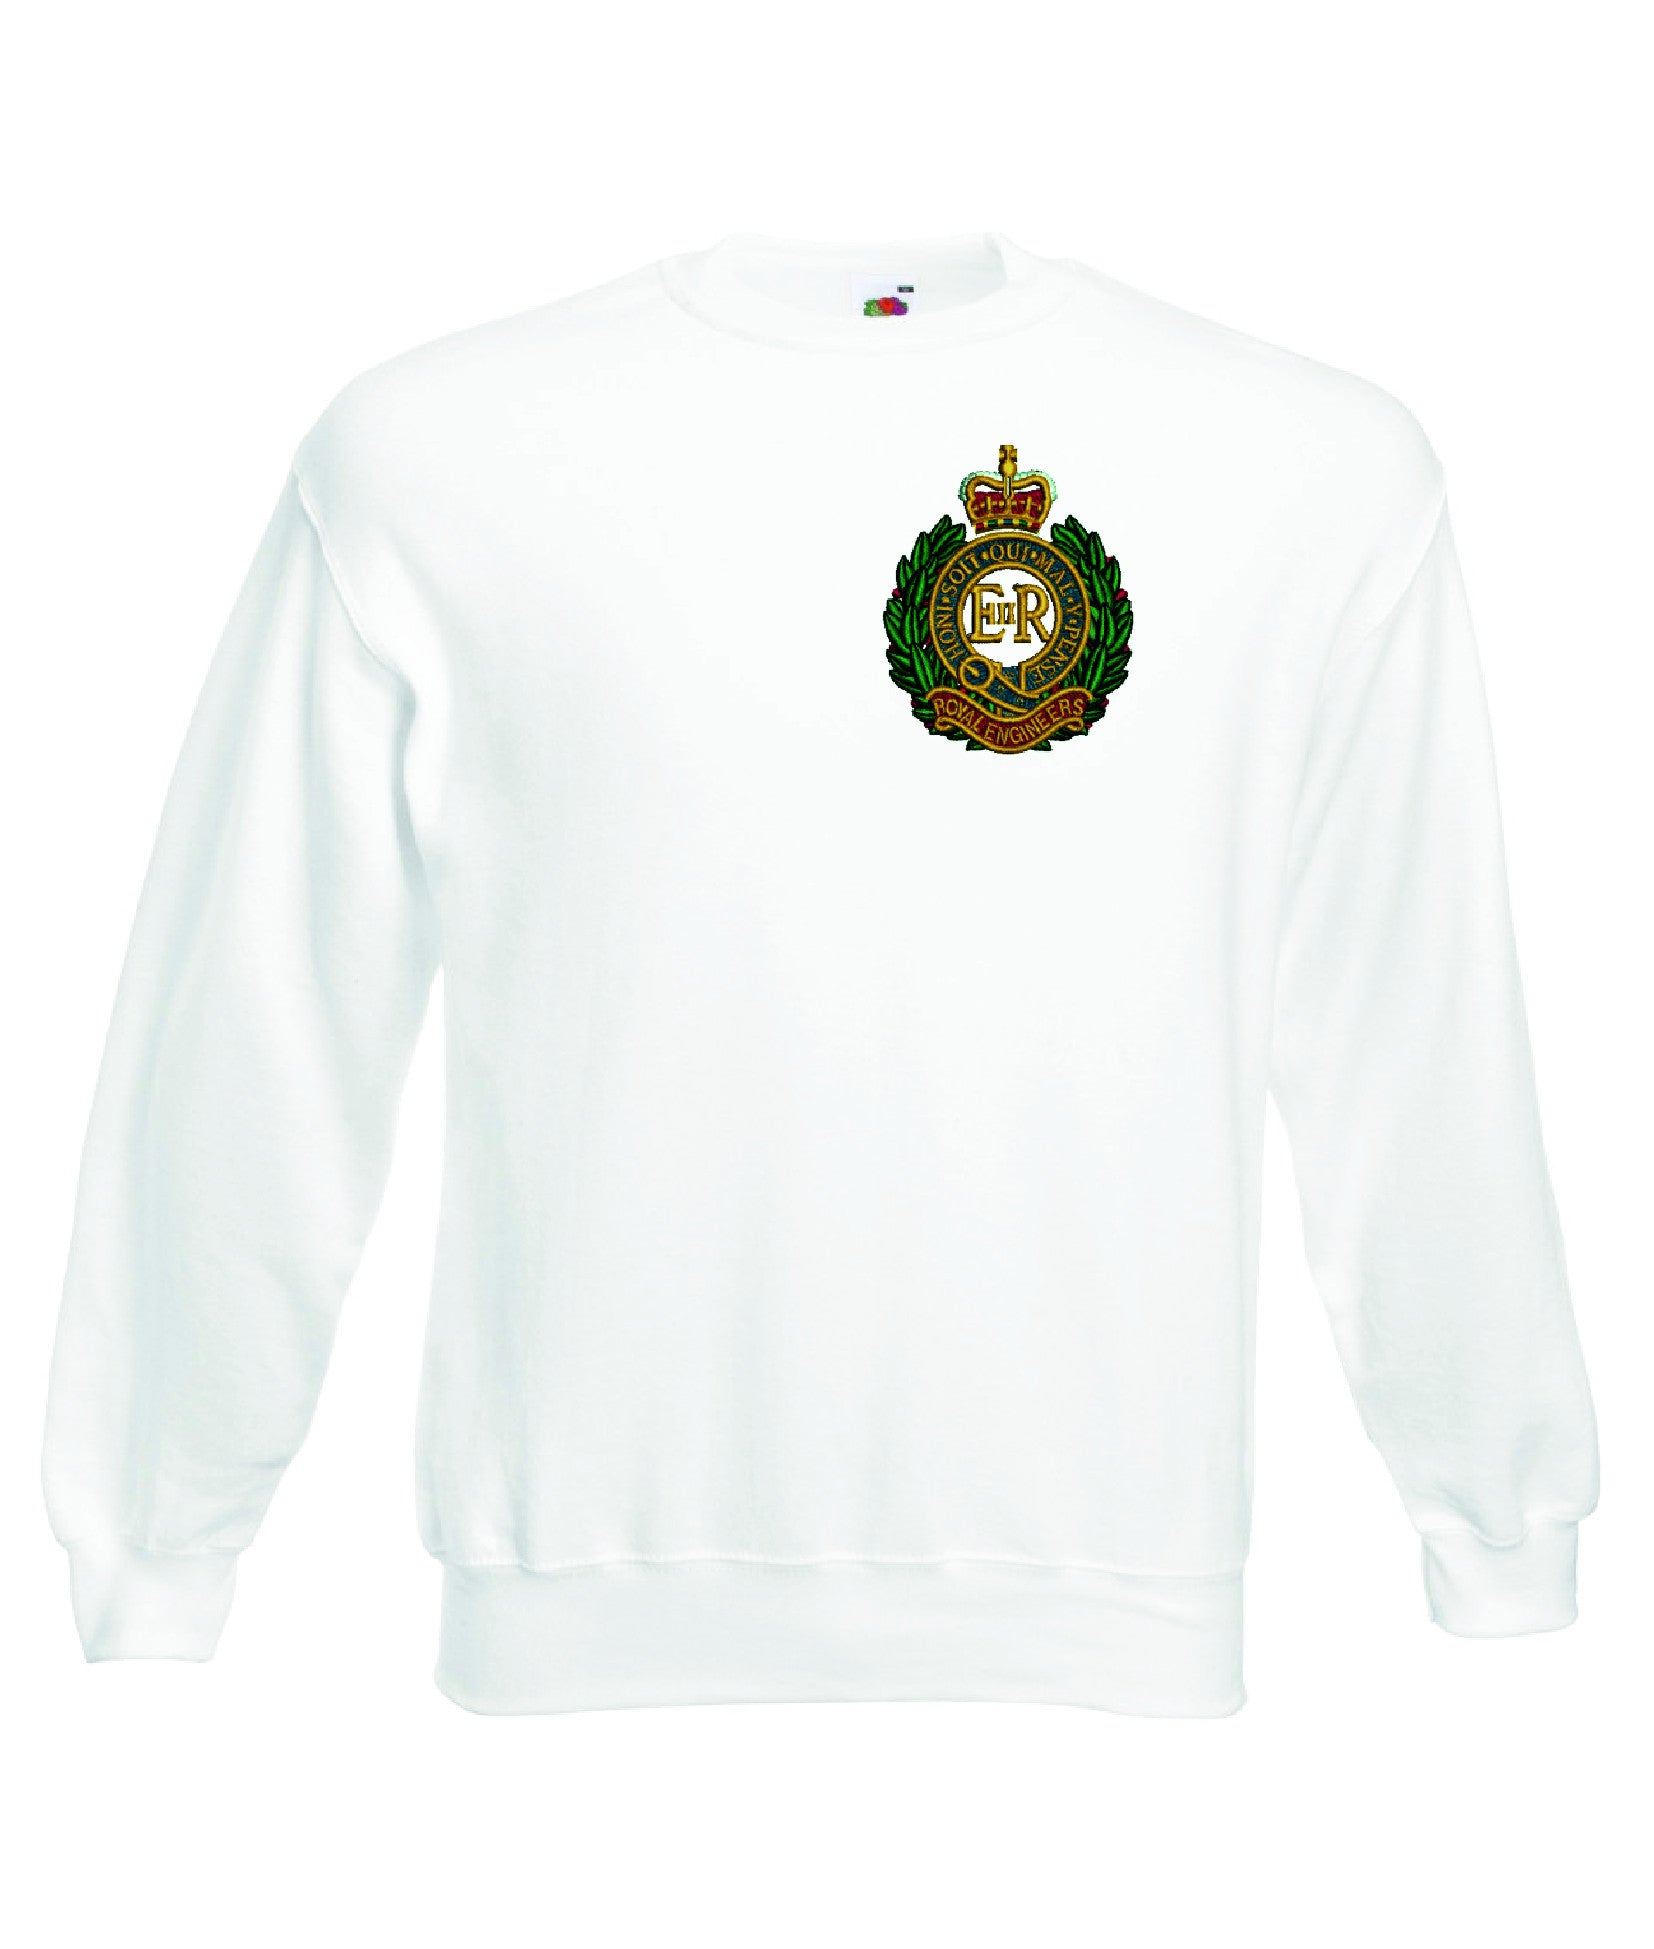 Royal Engineers Sweatshirts